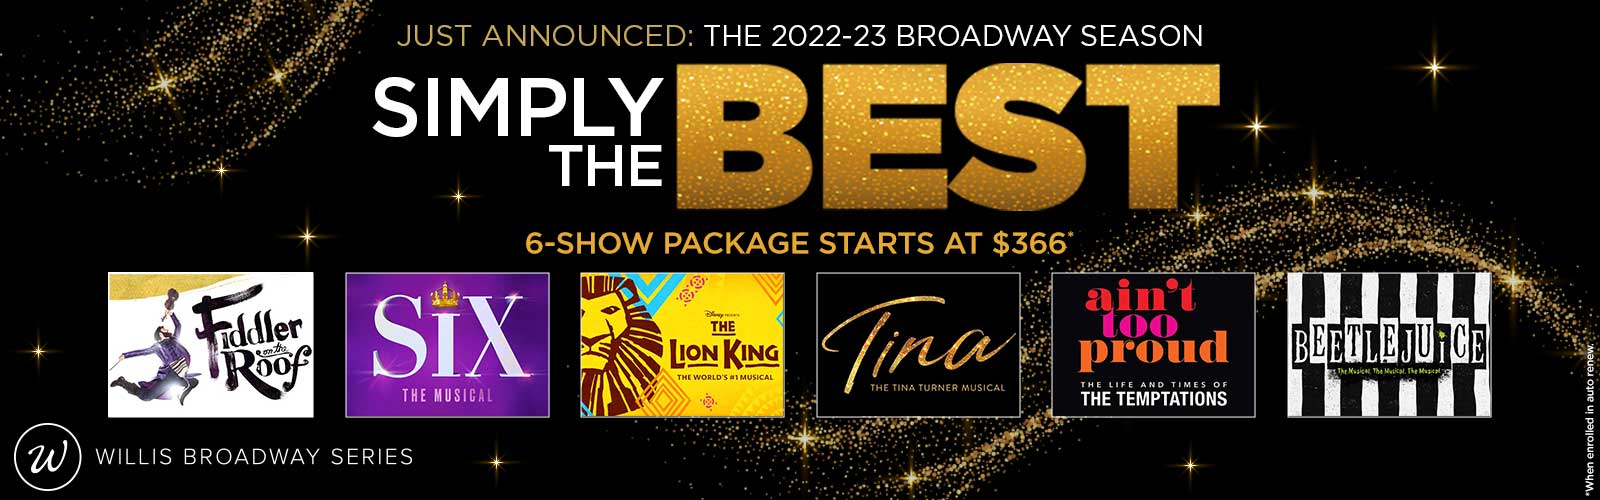 Broadway Season 2022-23